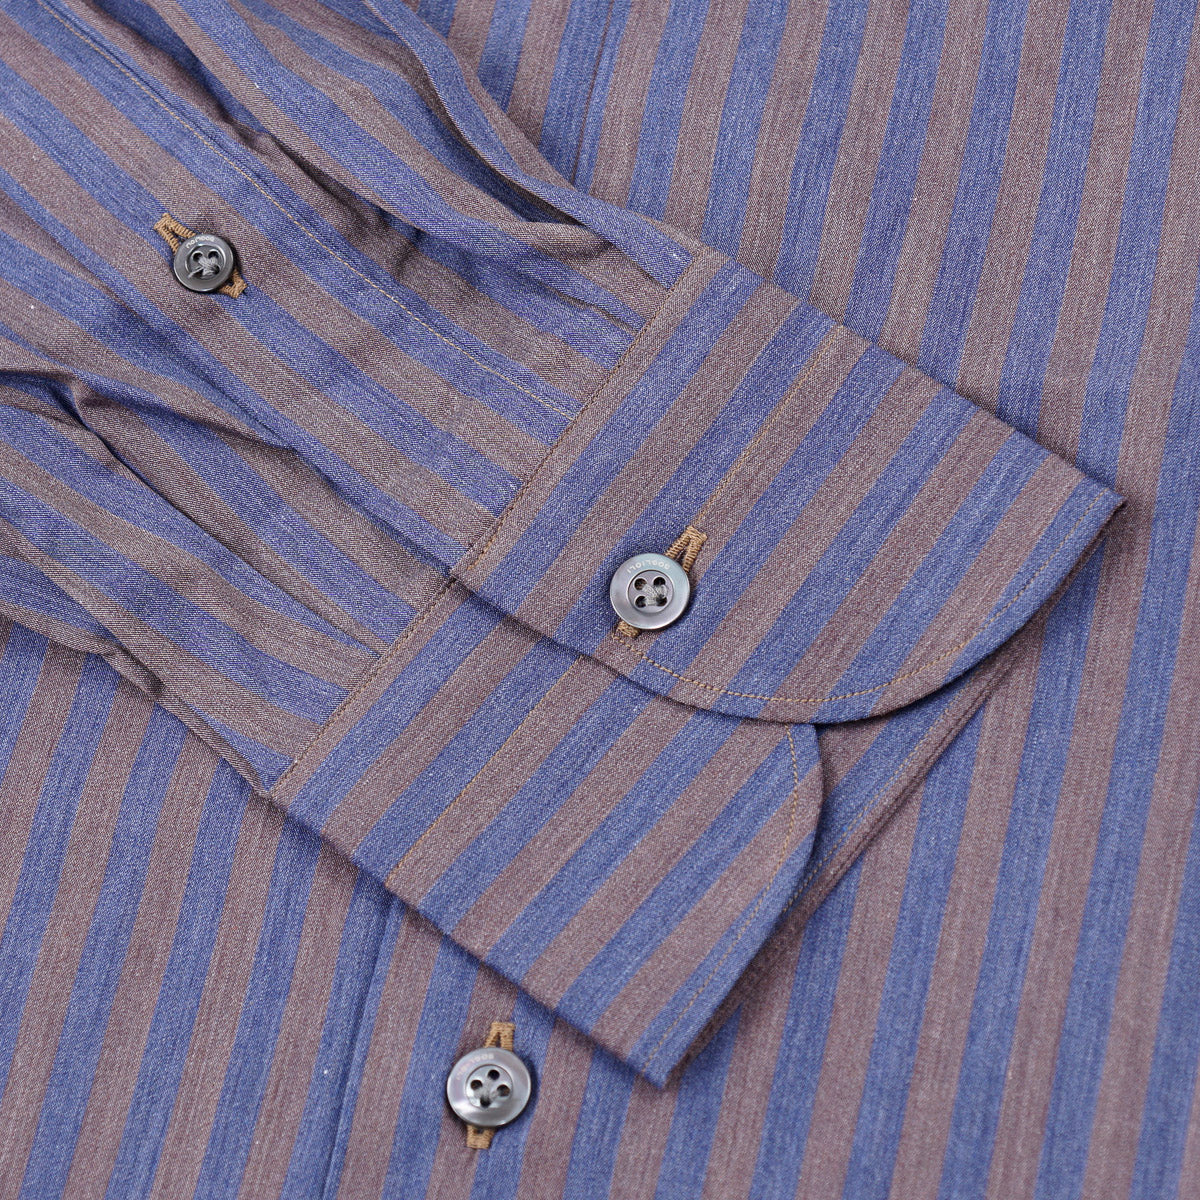 Boglioli Slim-Fit Lightweight Cotton Shirt - Top Shelf Apparel